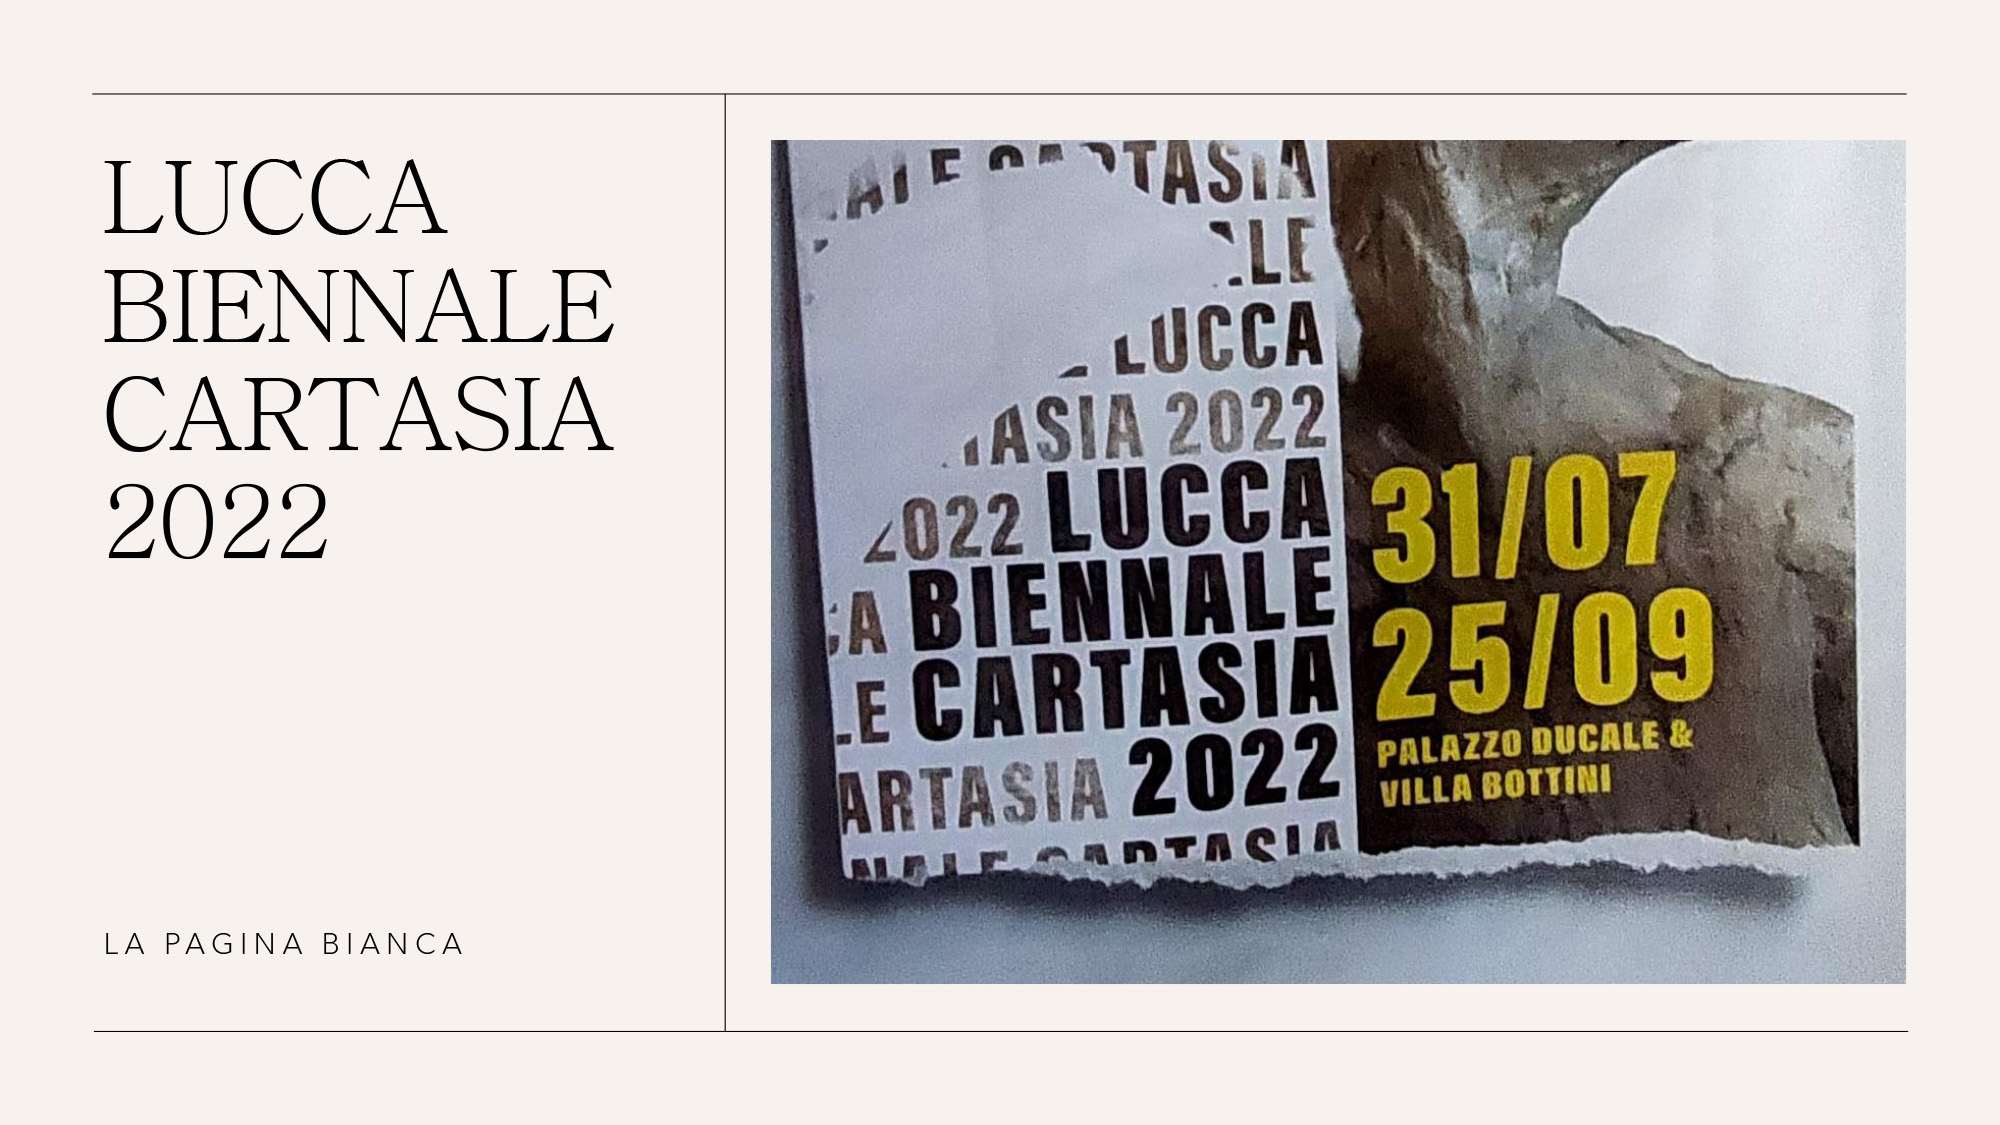 Lubica – Lucca Biennale Cartasia 2022